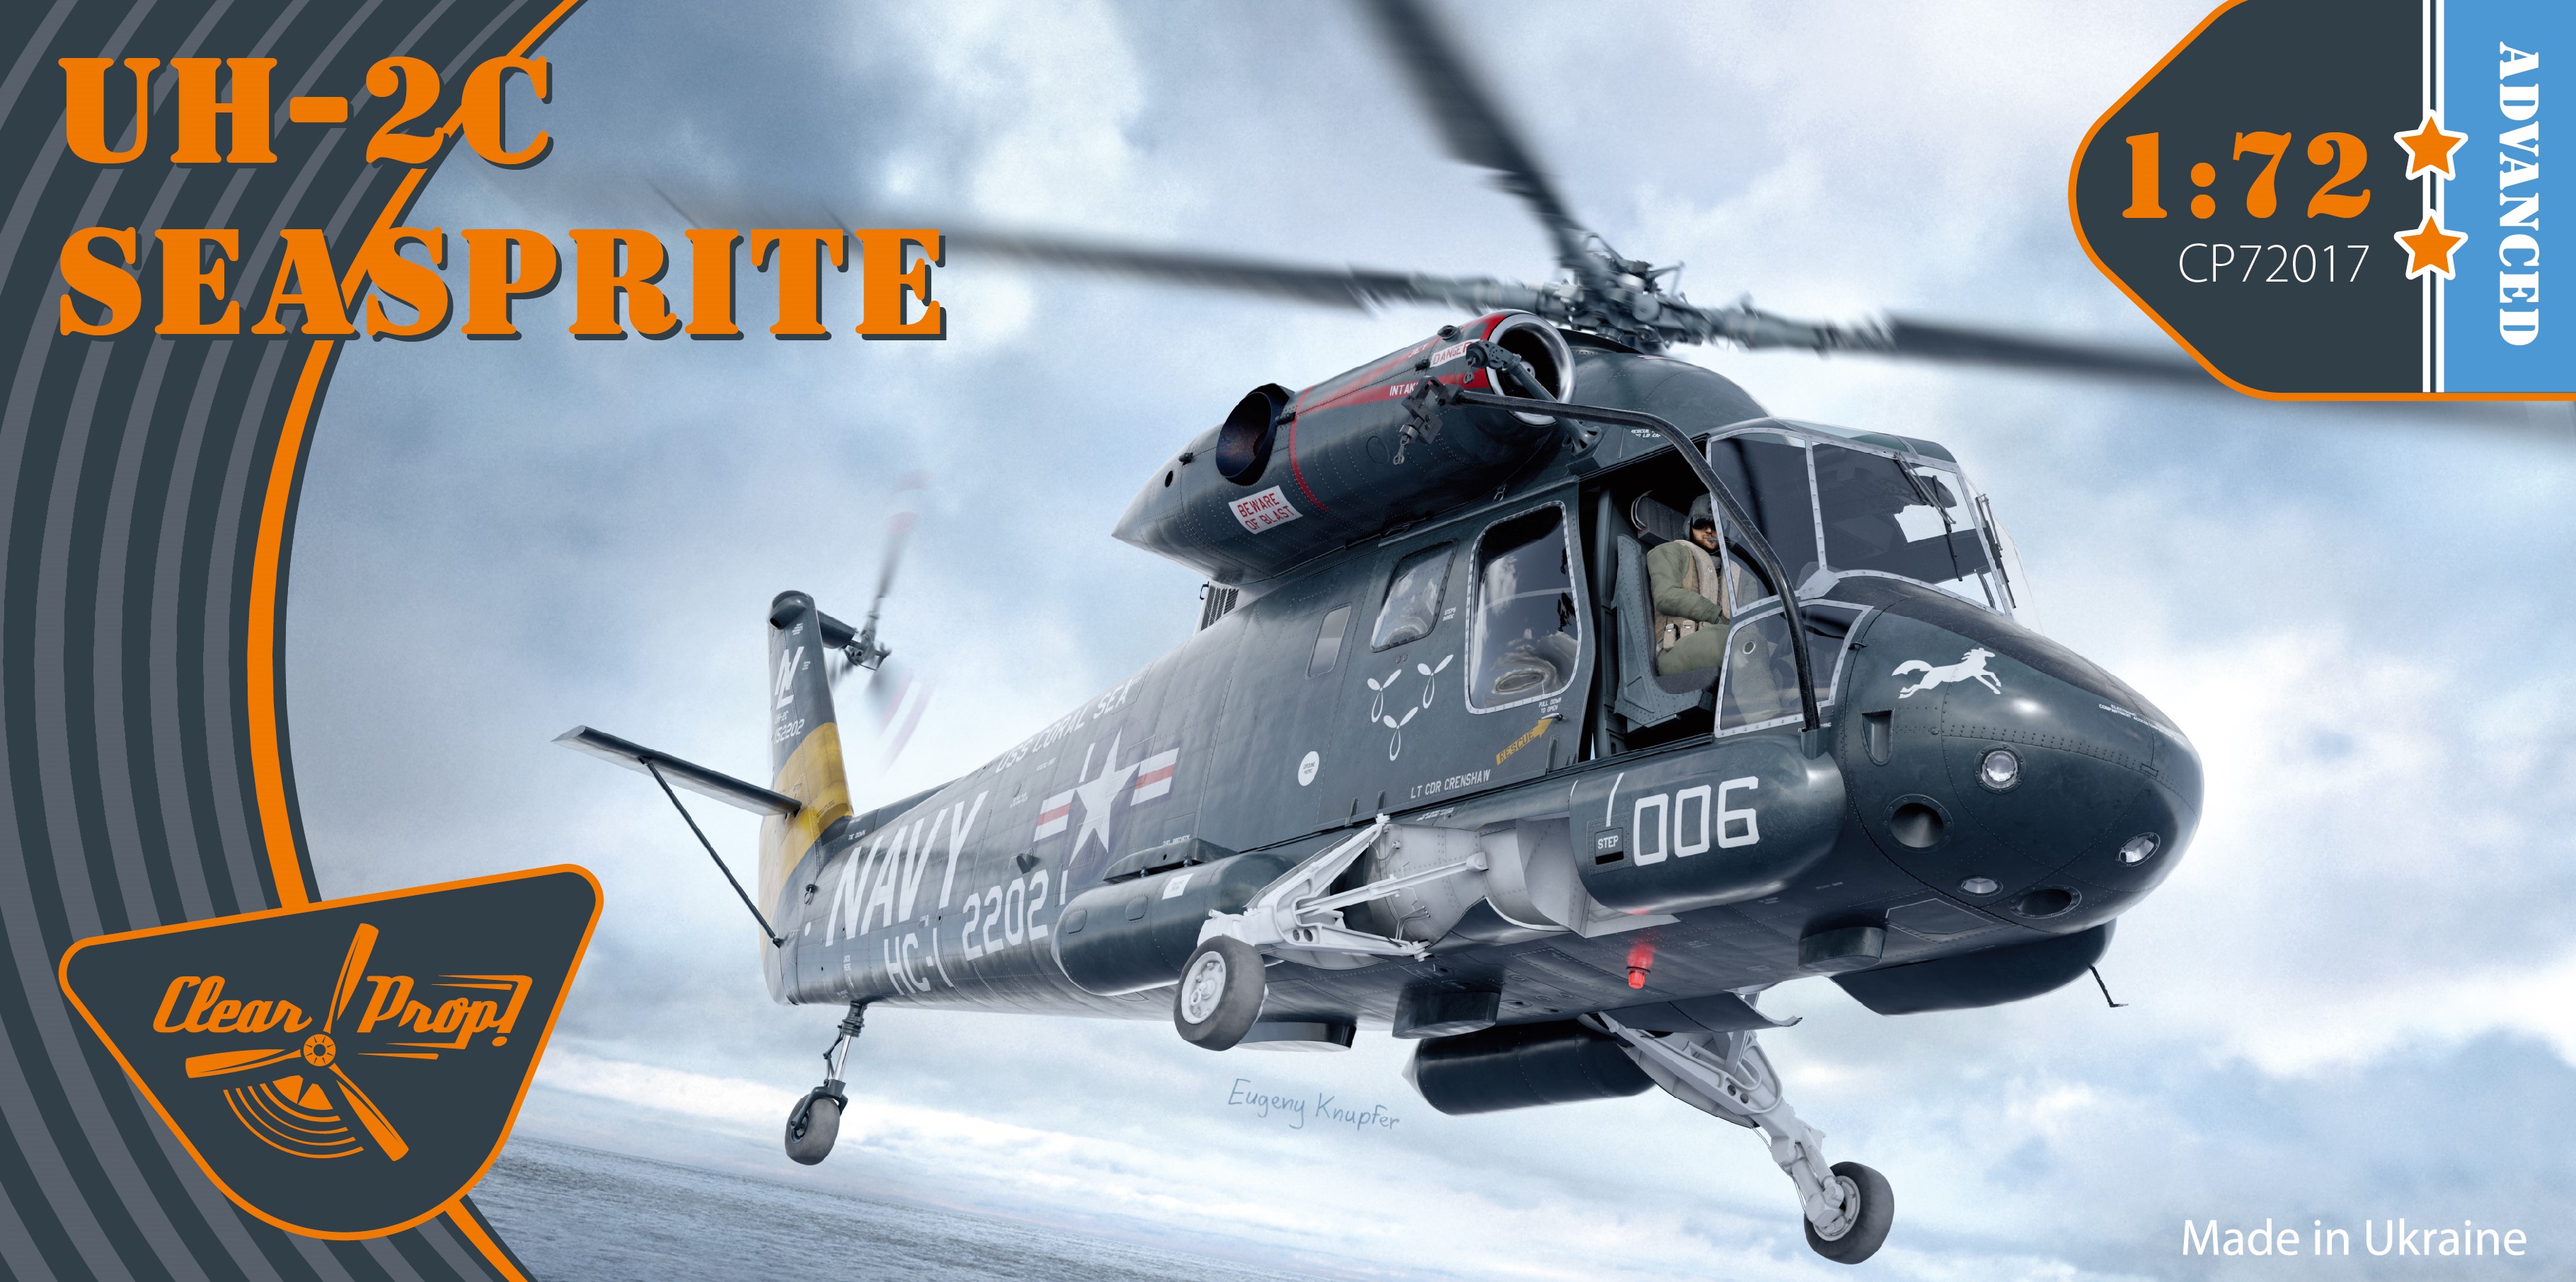 1/72 UH-2C Seasprite Advanced kit - Clear Prop